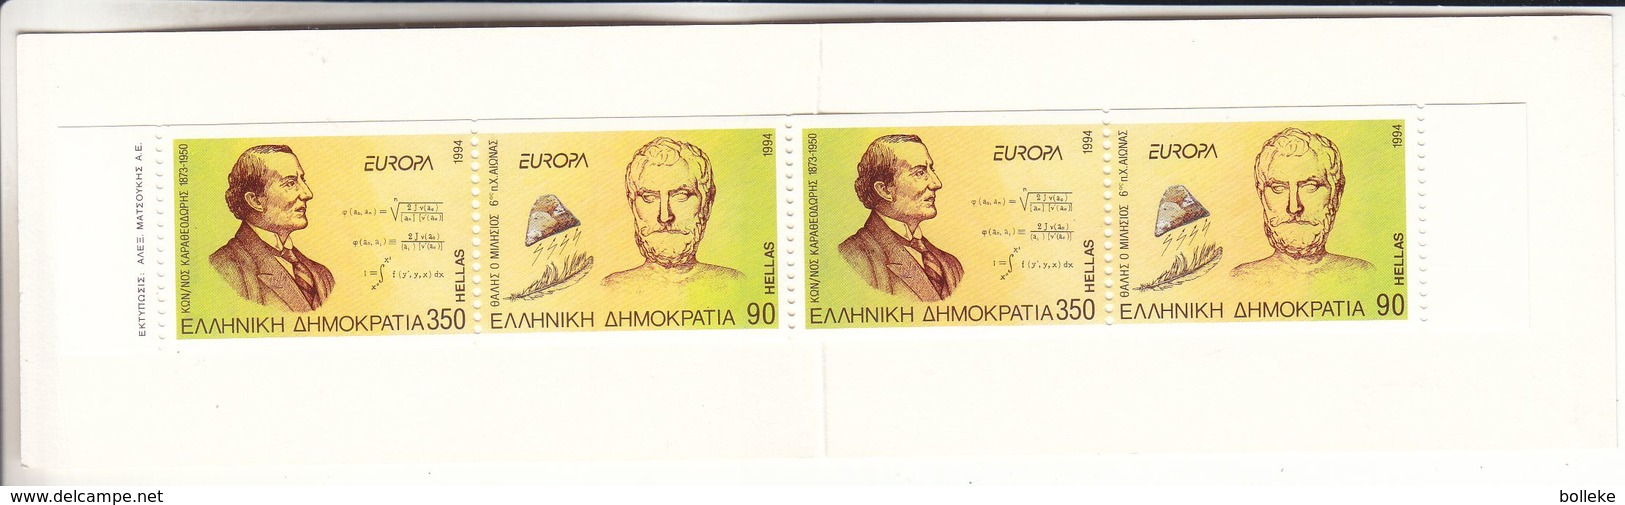 Europa 1994 - Grèce - Yvert Carnet 1839  ** - MNH - Valeur 17,00 Euros - Carnets